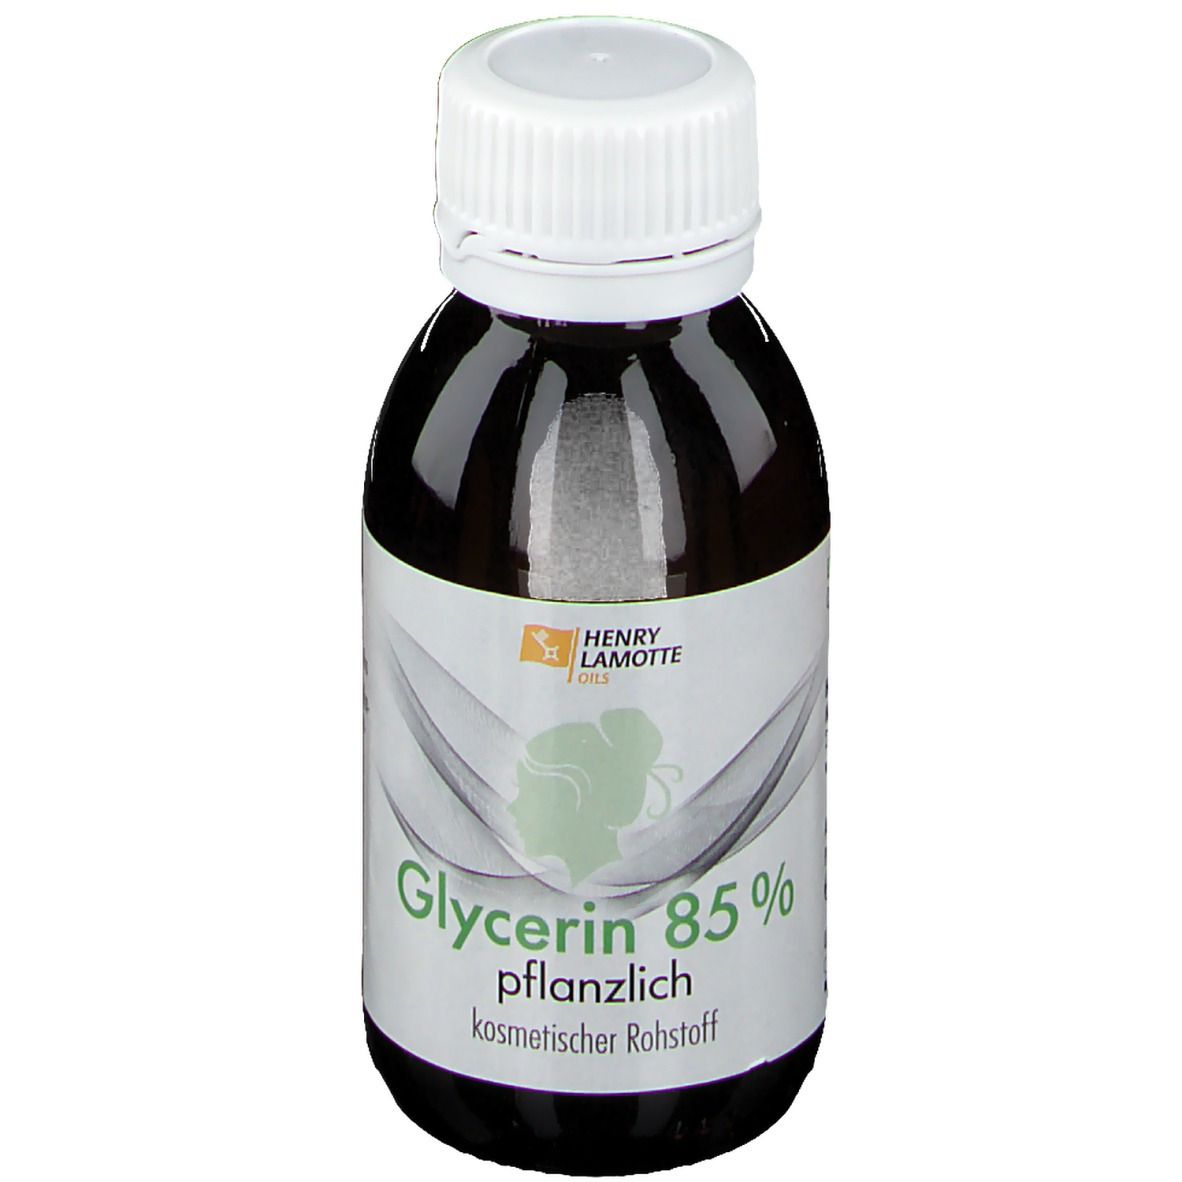 Image of HENRY LAMOTTE OILS Glycerin 85%